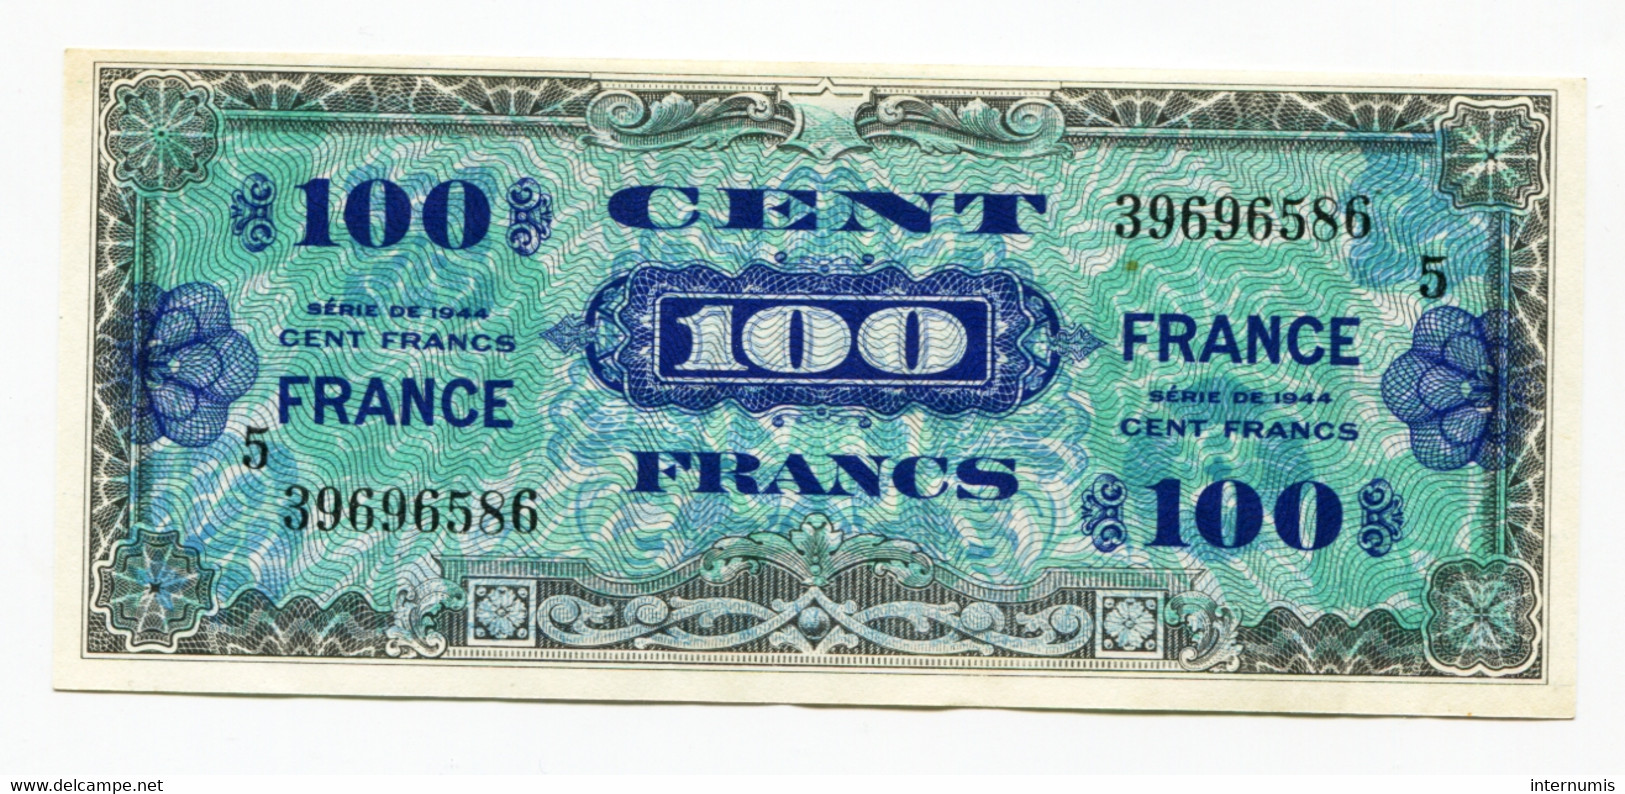 France, 100 Francs, FRANCE SERIE 5 IMPRESSION AMERICAINE, TYPE DE 1944, N° : 5-39696586, SPL (AU), VF.25.05 - 1945 Verso Francés